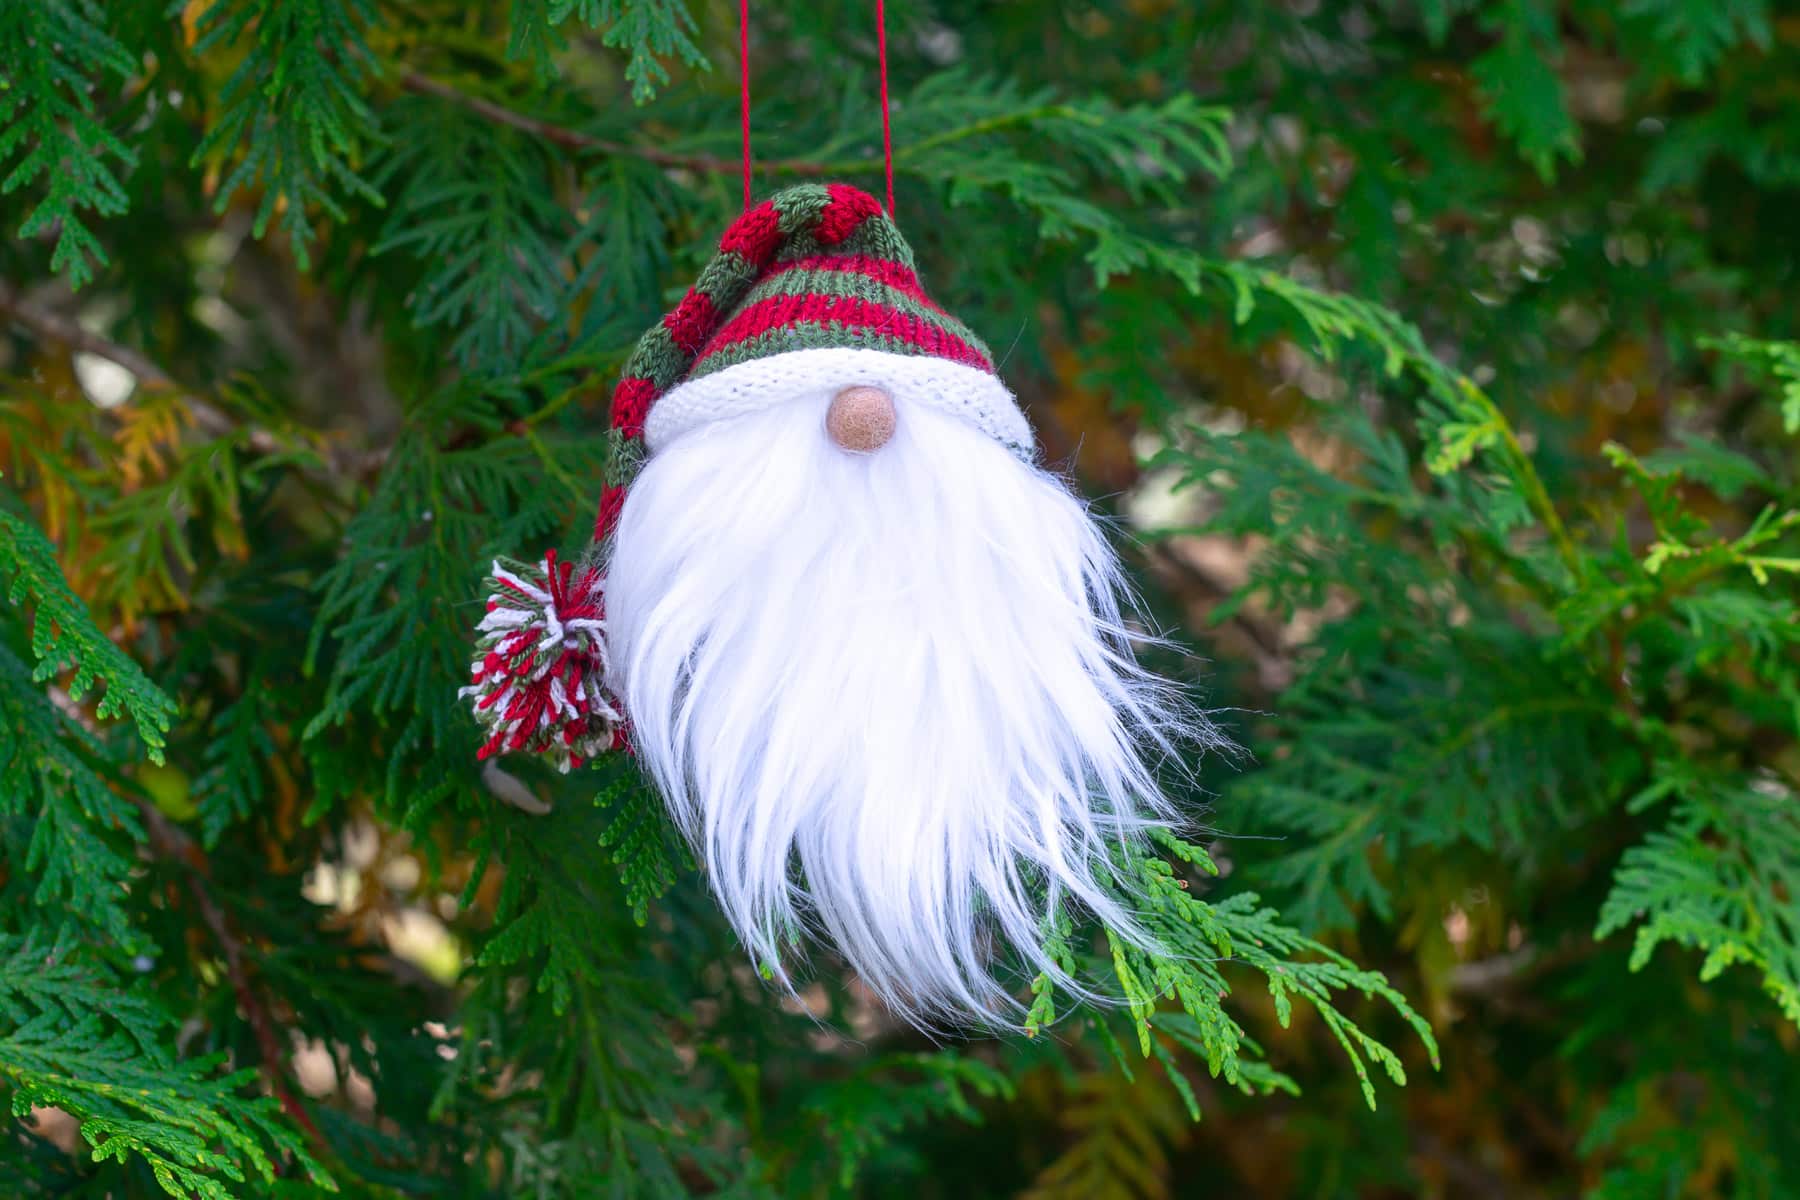 Gnome Knitting Pattern – Christmas Ornaments